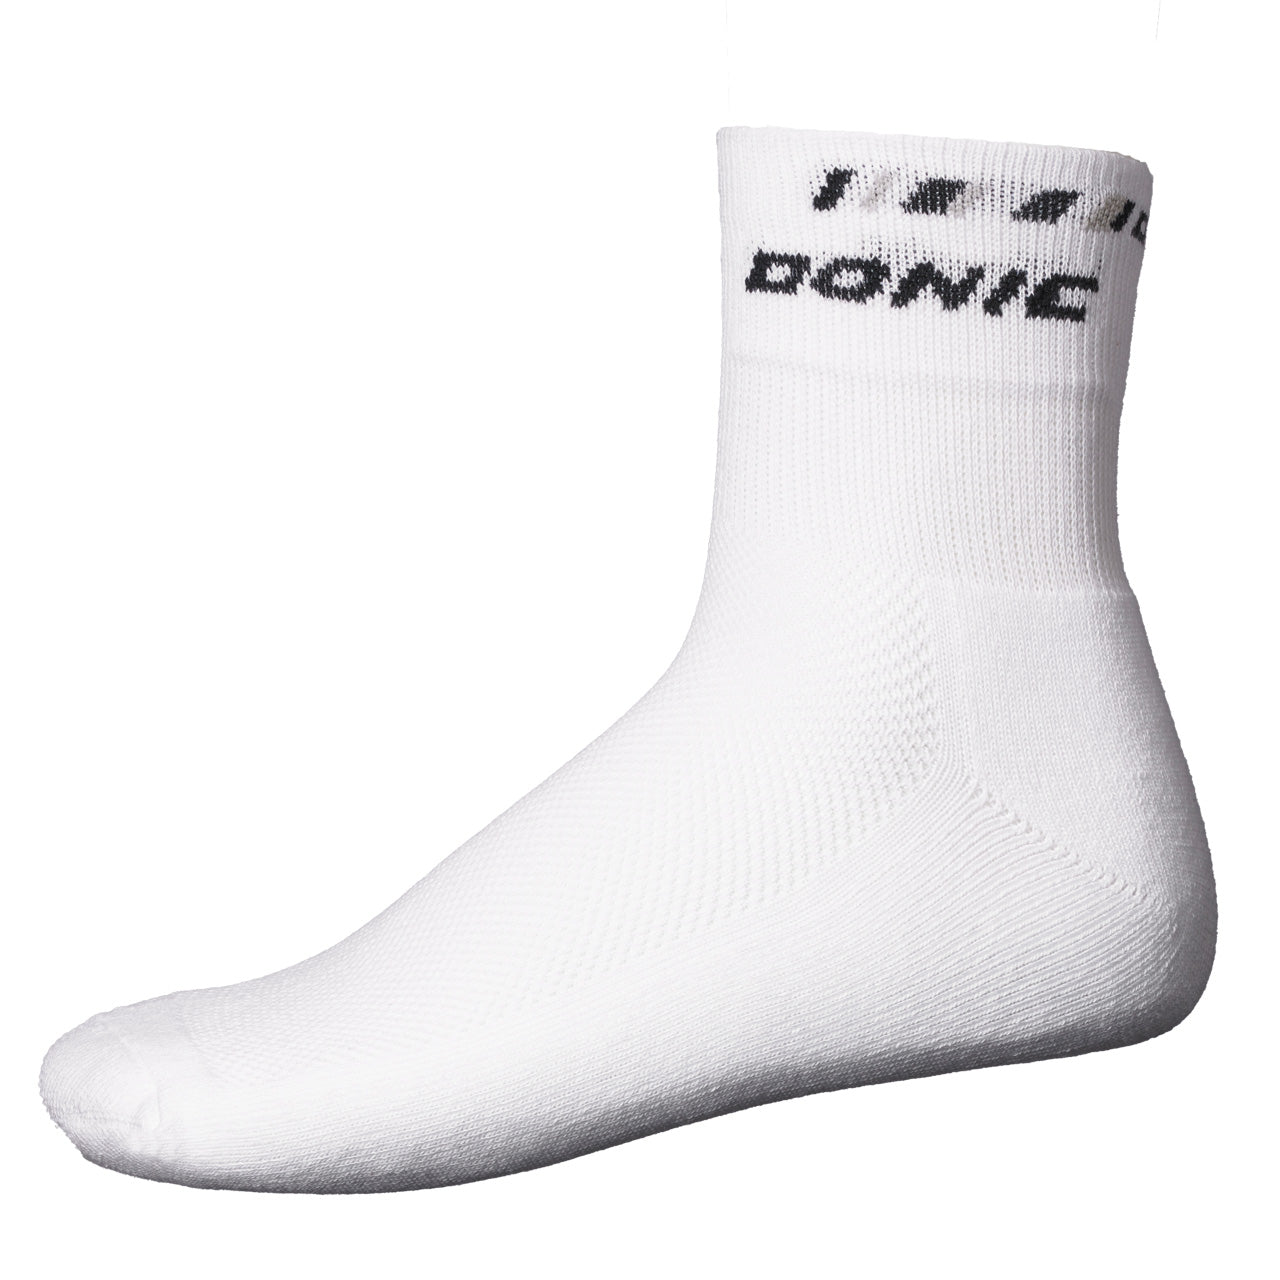 Donic Socks Etna